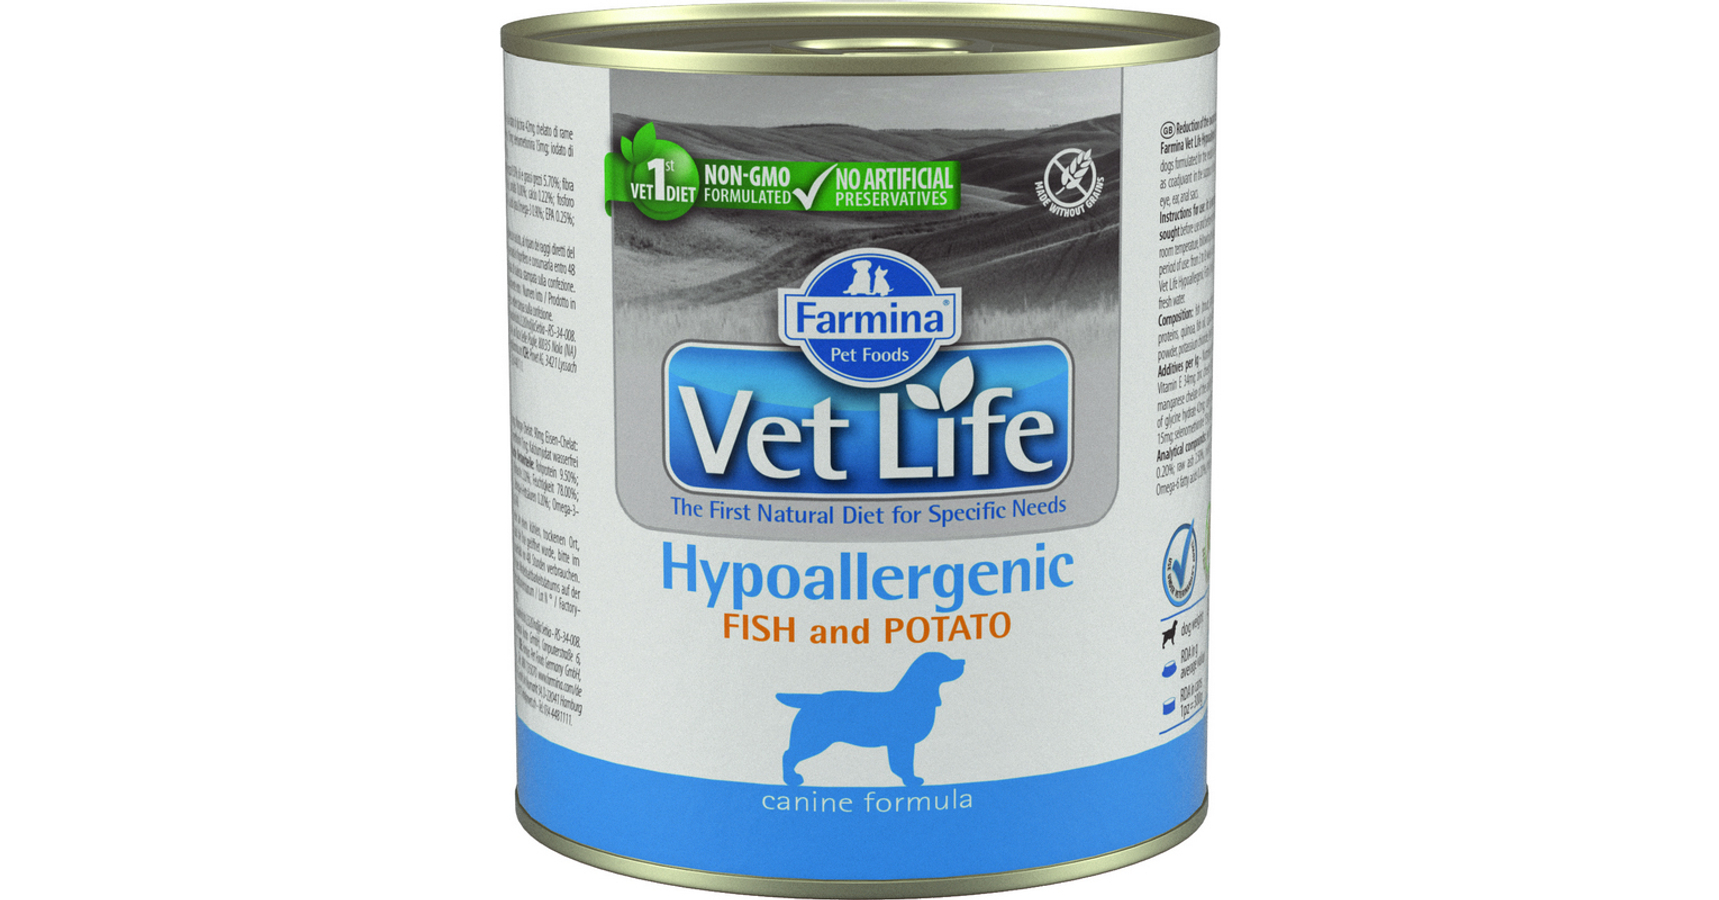 Vet life hypoallergenic для собак